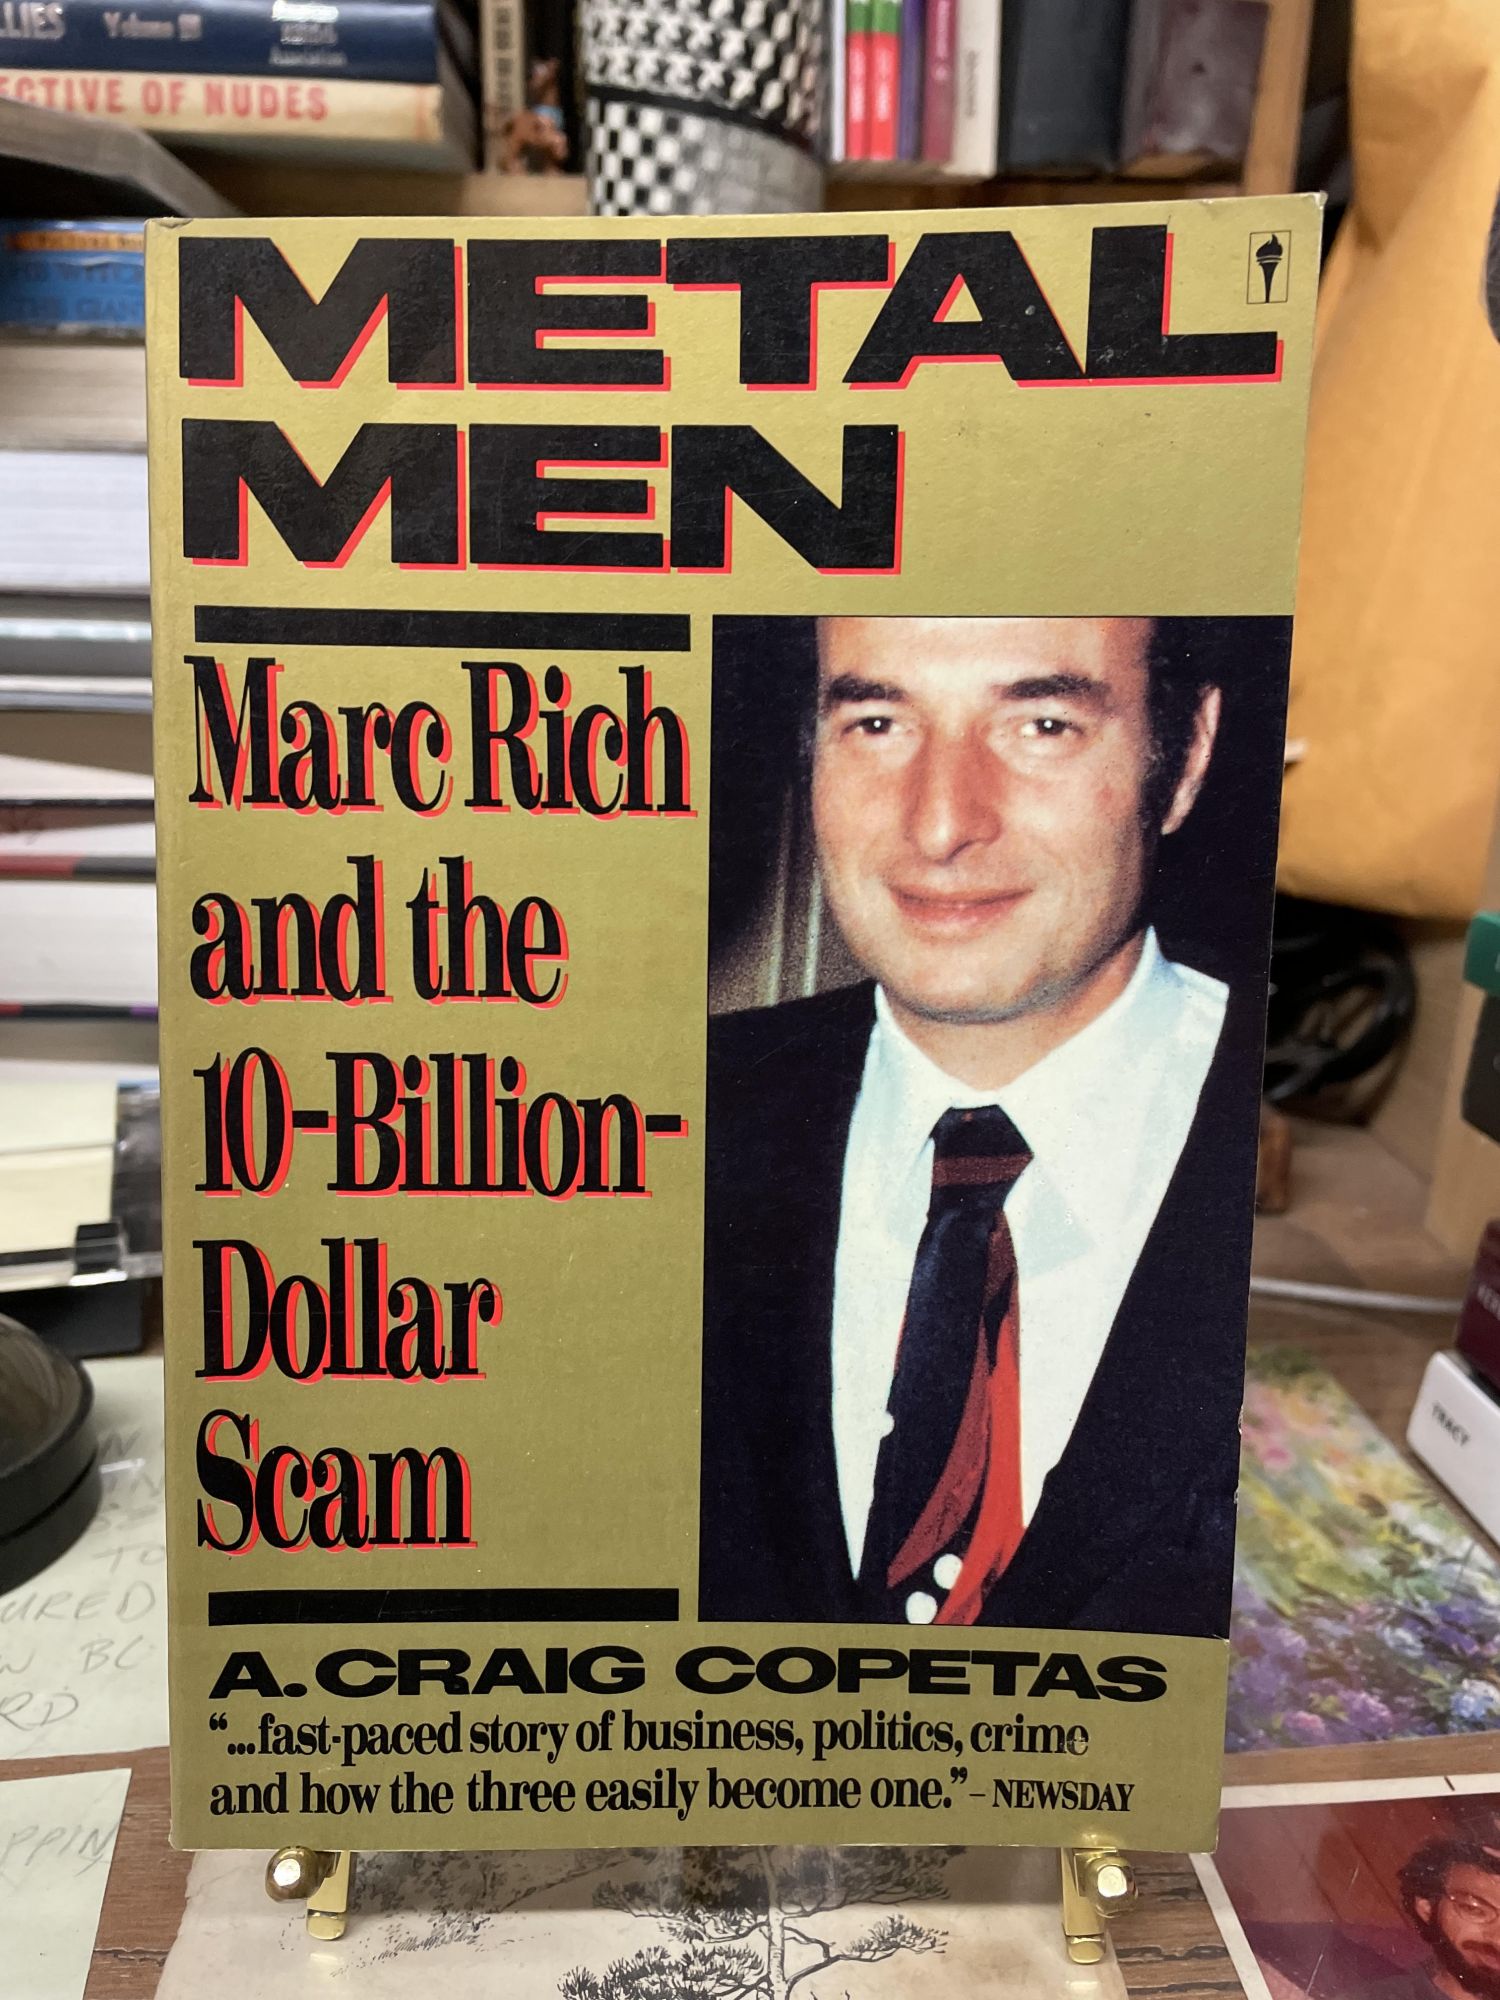 Metal Men: Marc Rich and the 10-Billion-Dollar Scam, A. Craig Copetas